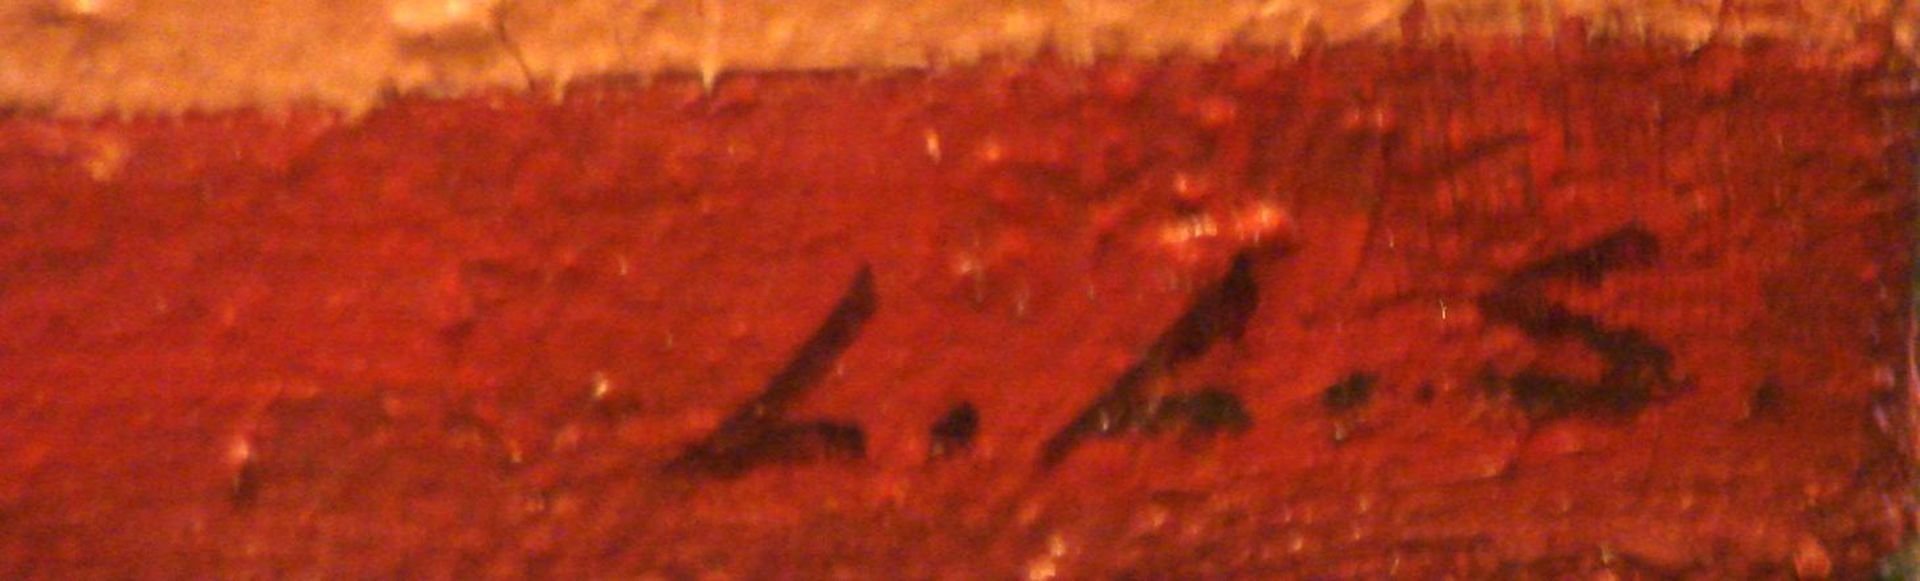 LORE-LINA SCHMIDT-ROßNAGEL (1923-2011), "Figuration I", orangefarbener-roter Kreis auf hellem F ... - Image 2 of 2